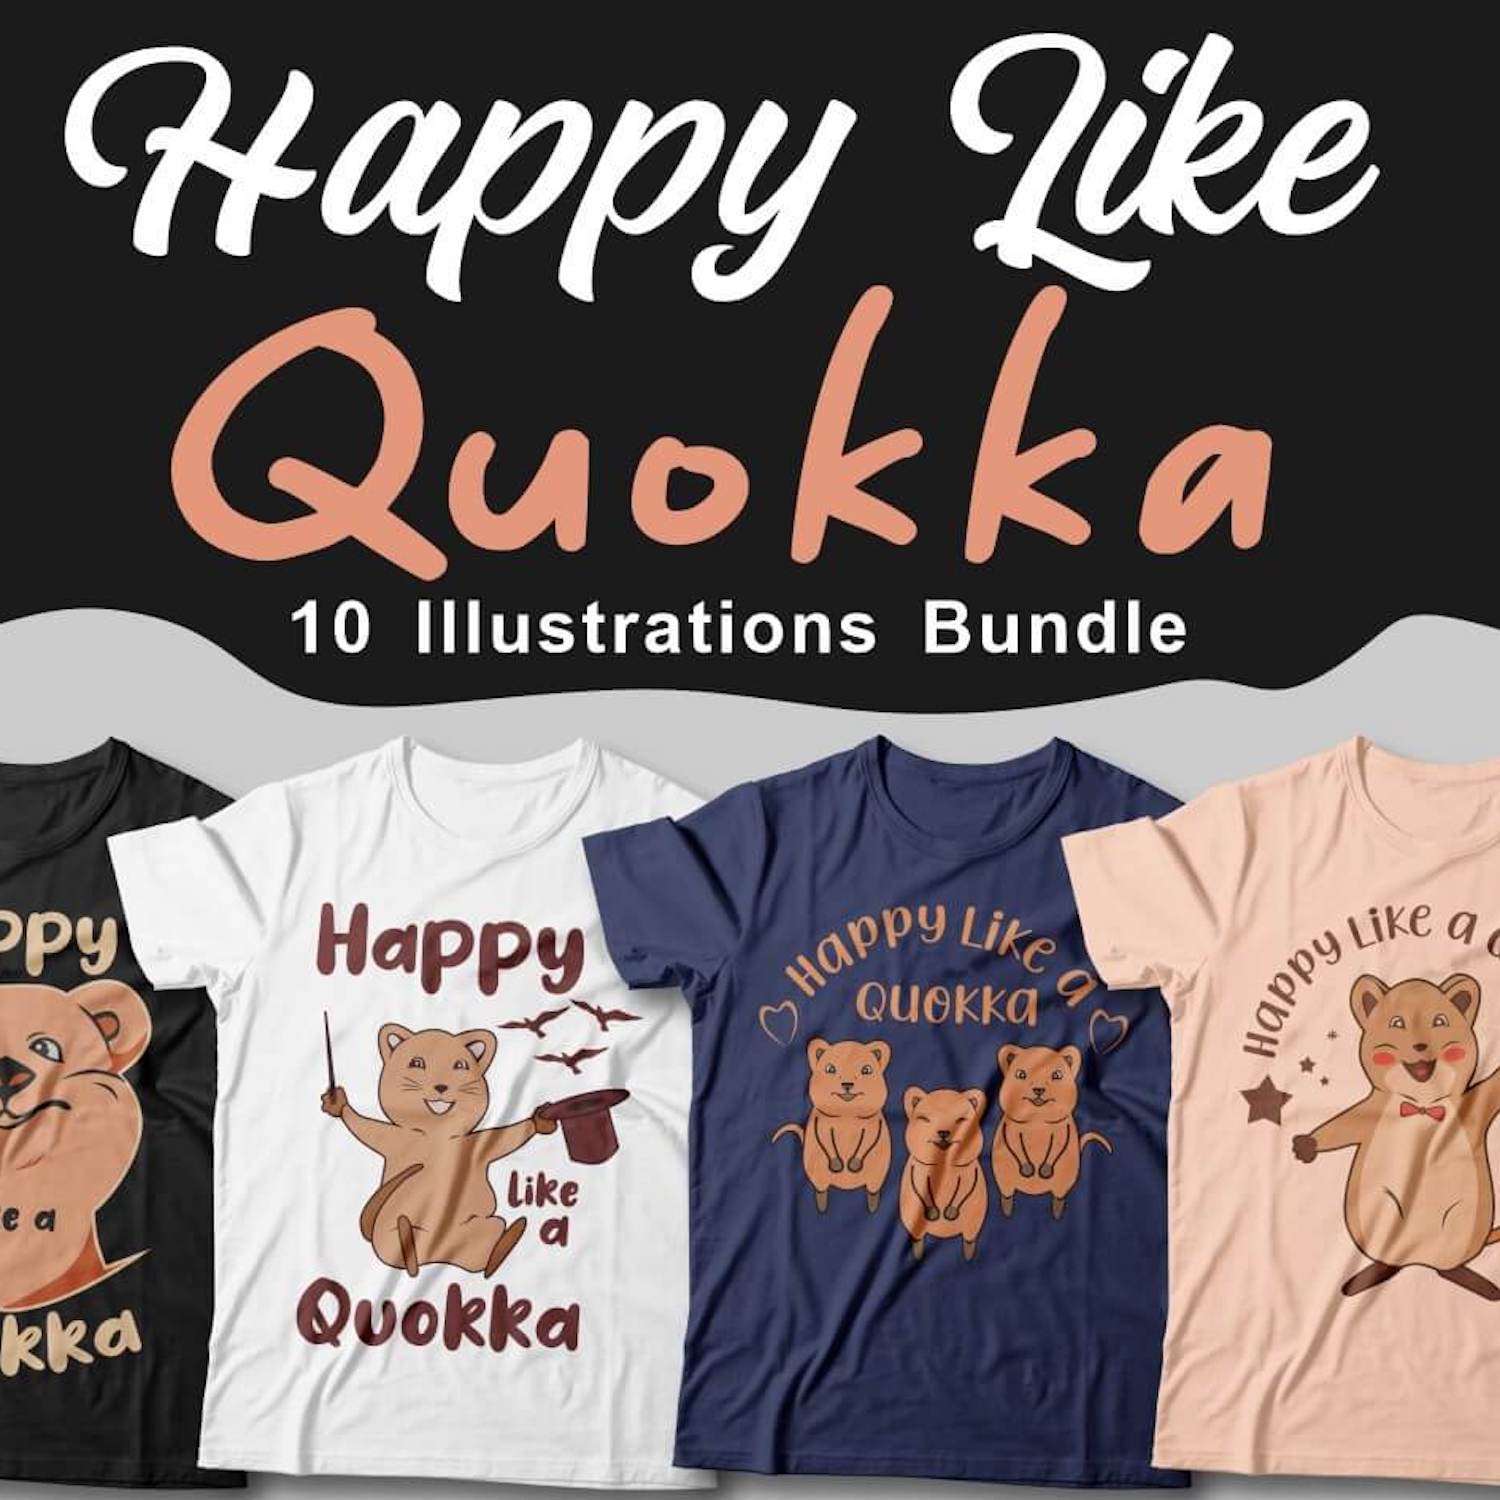 Happy Like a Quokka T-Shirt Bundle cover image.